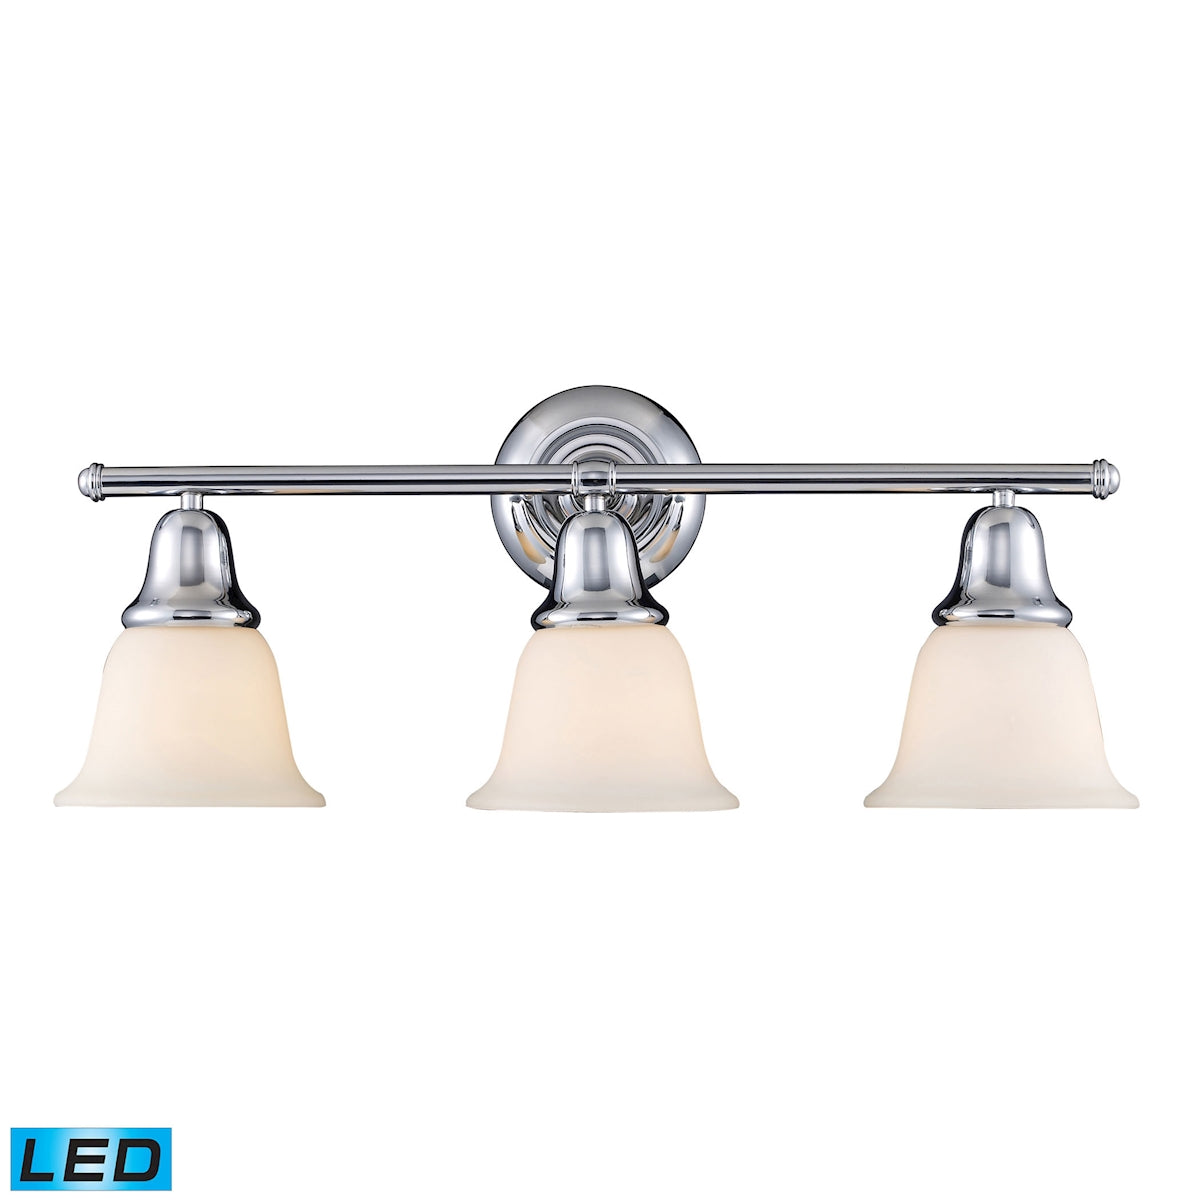 ELK Lighting 67012-3-LED Berwick 3-Light Vanity Lamp in Polished Chrome with White Glass - Includes LED Bulbs